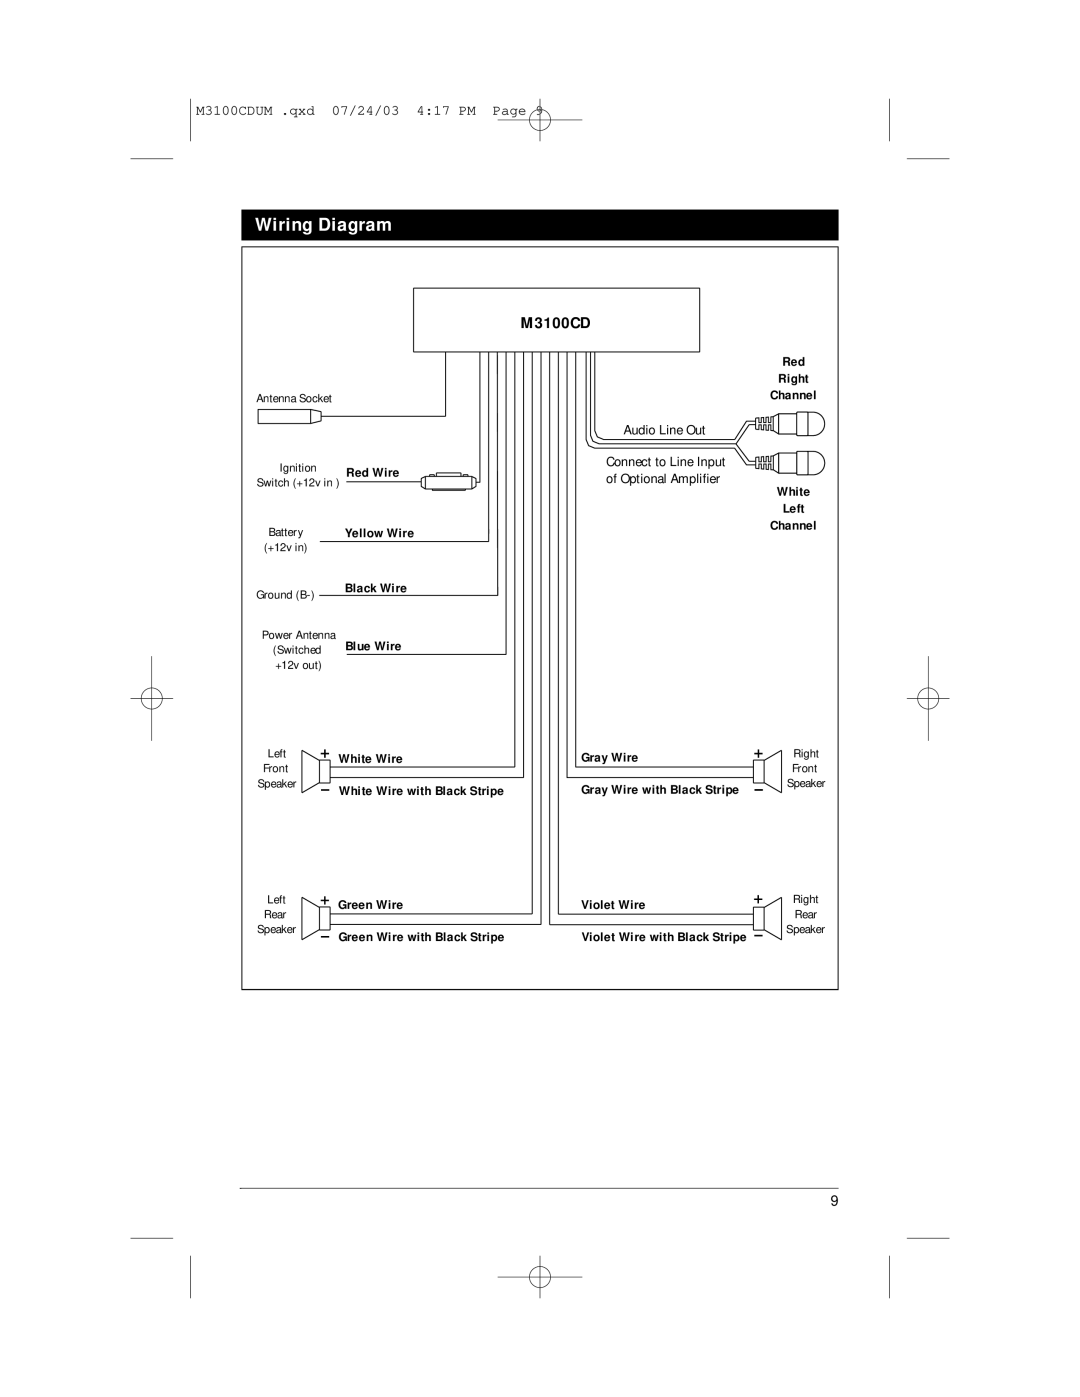 Magnadyne manual Wiring Diagram, M3100CDUM .qxd 07/24/03 4 17 PM Page, Gray Wire with Black Stripe 